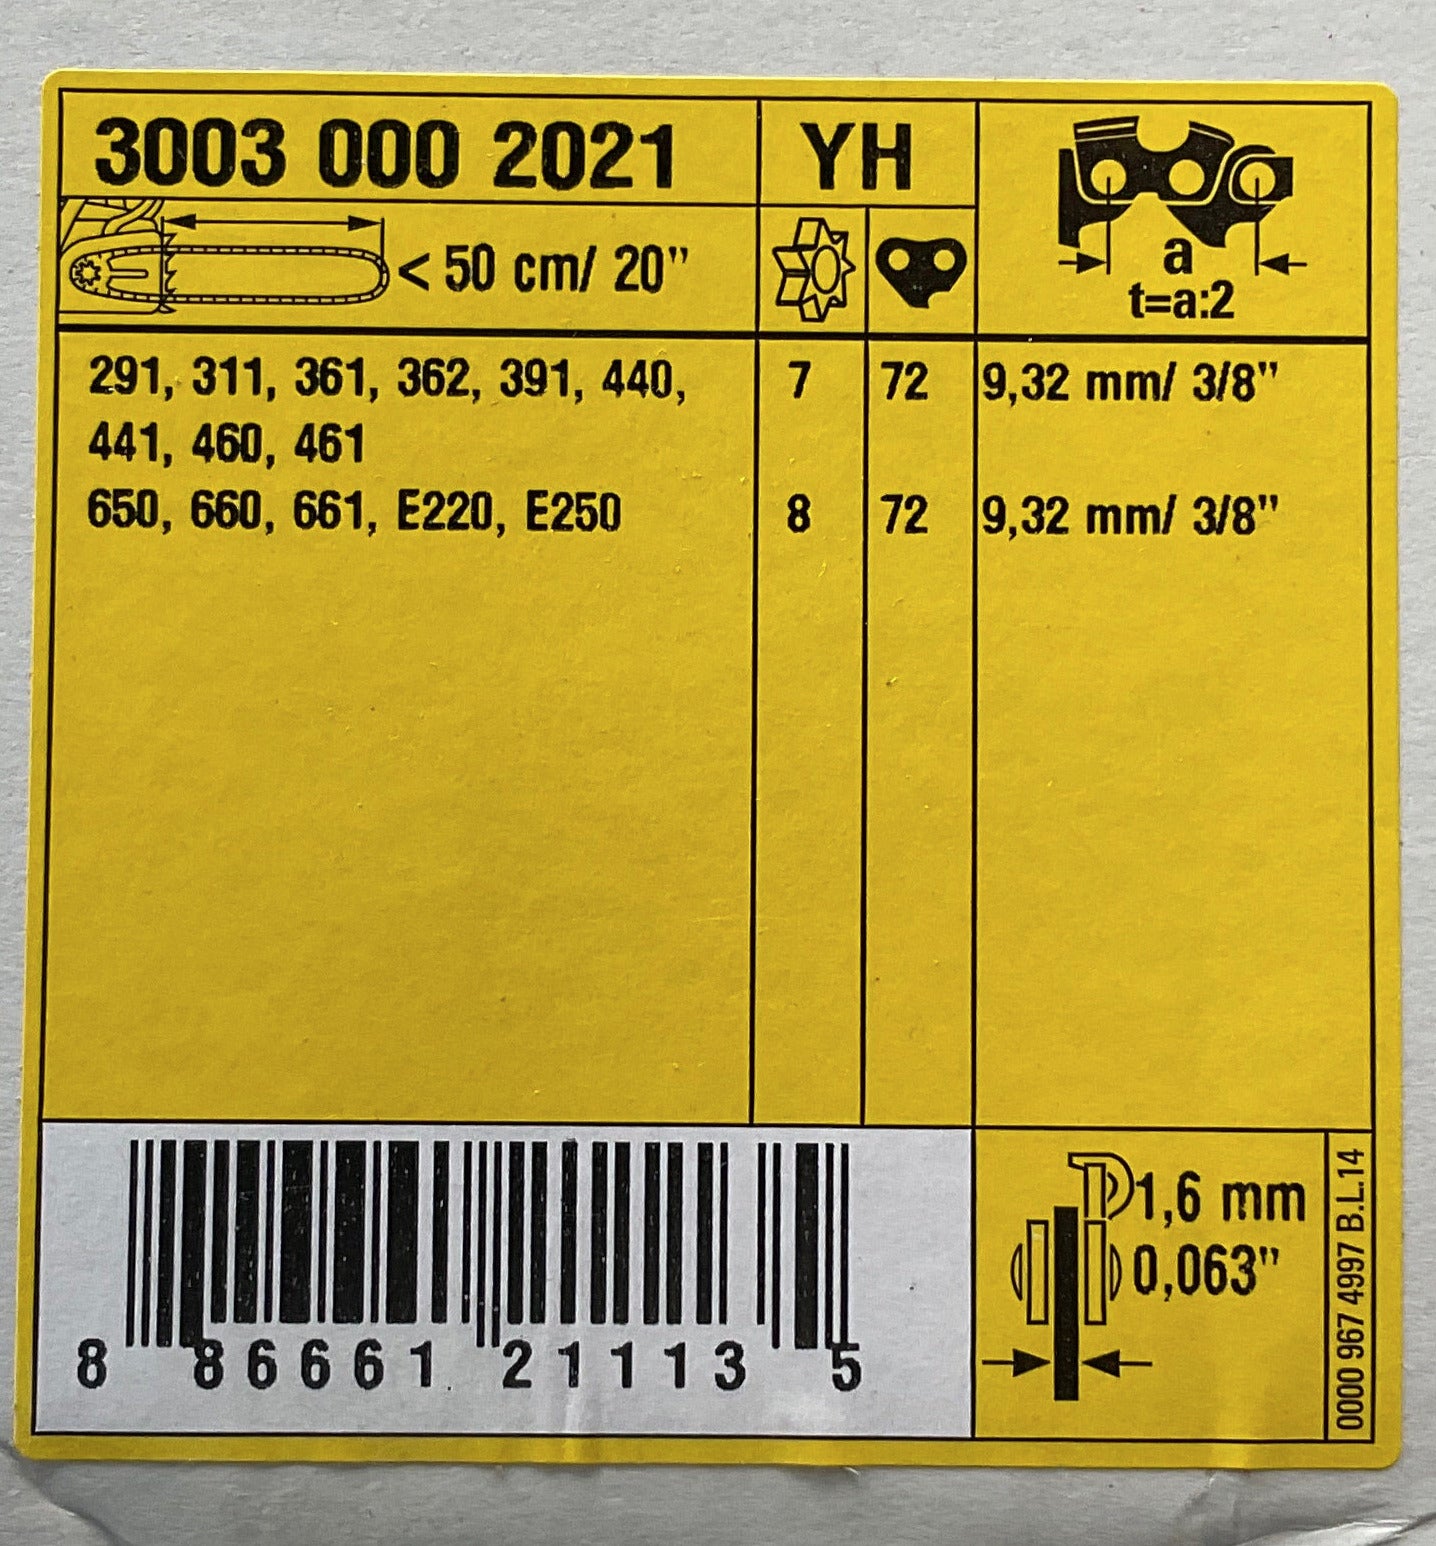 Stihl 3003 000 2021 - Rollomatic ES Light Chainsaw Guide Bar - 20" (50cm)